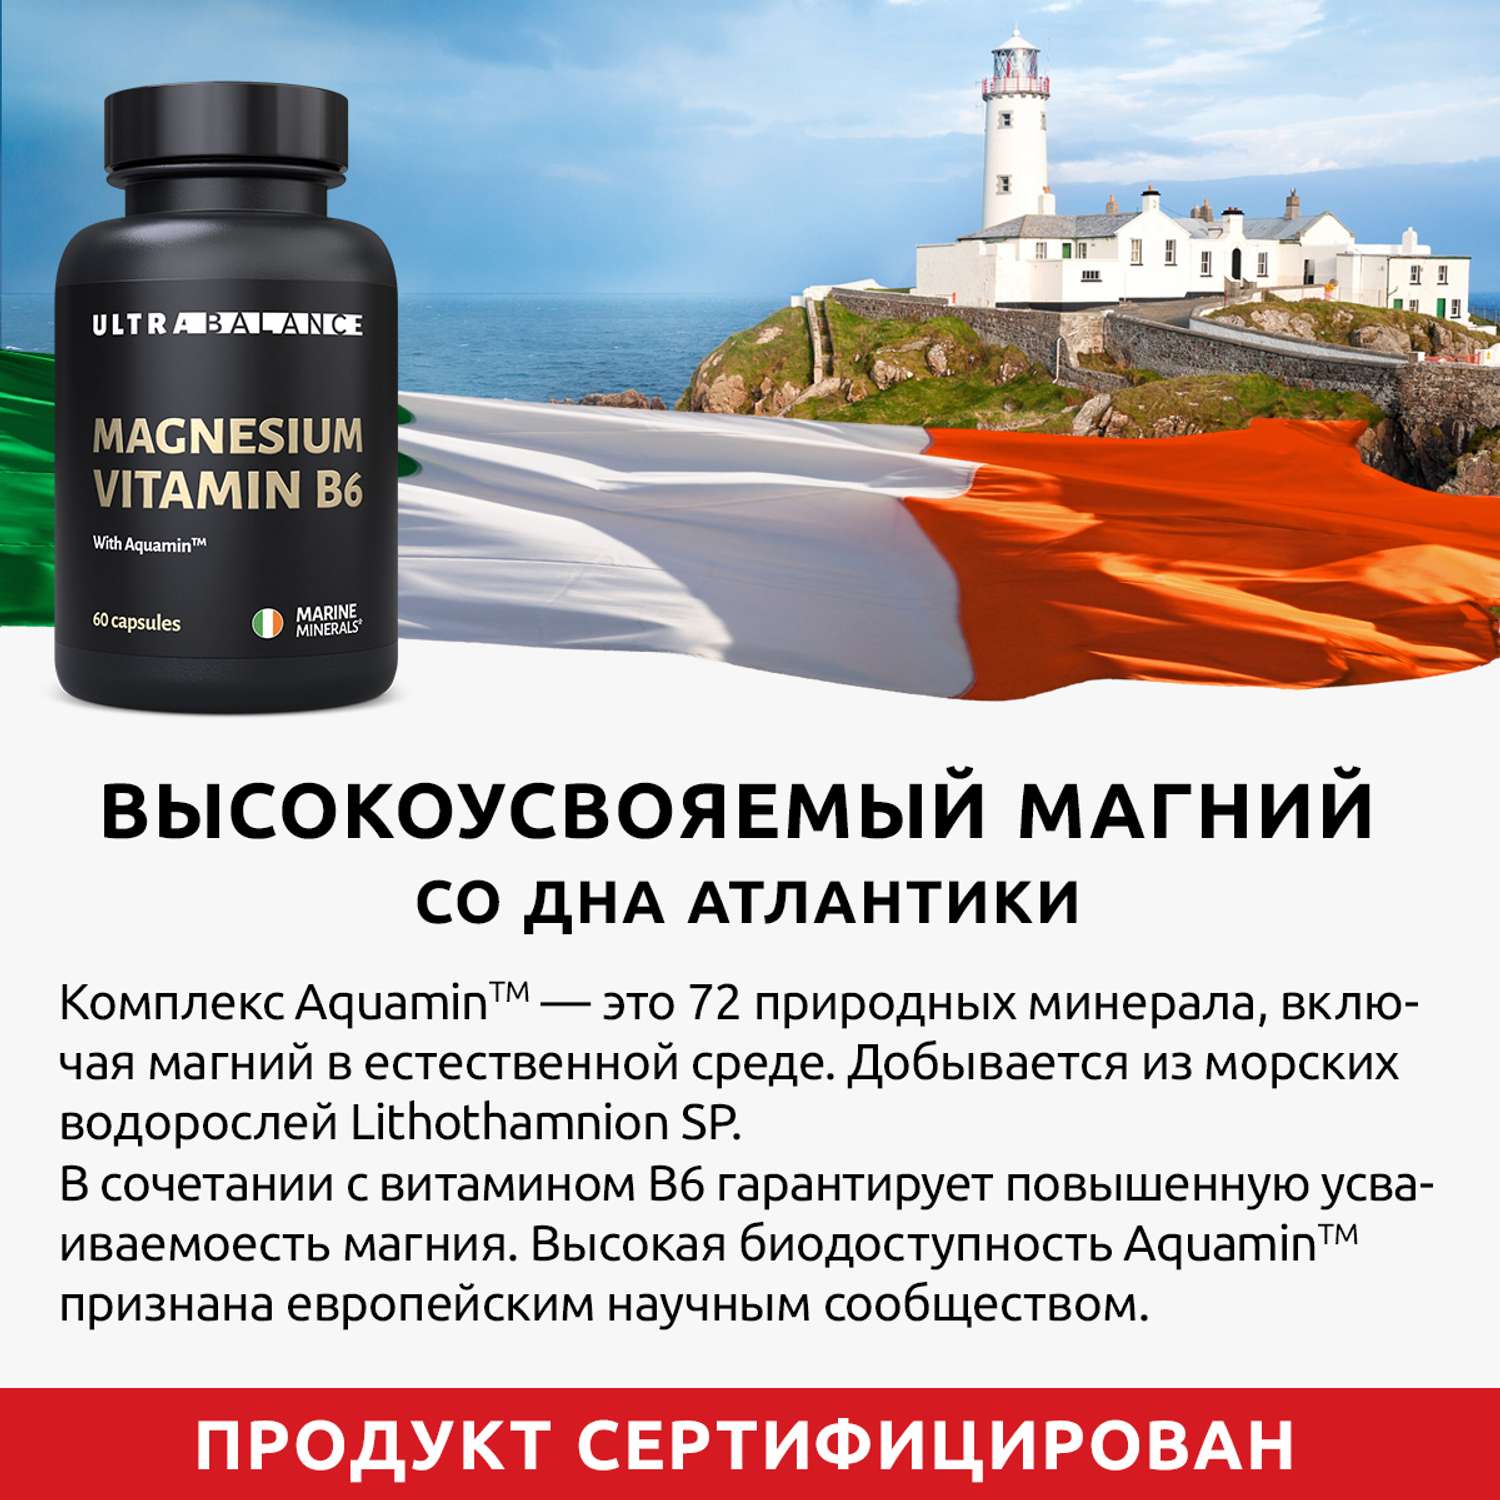 Магний витамин В6 UltraBalance антистресс успокоительное Mg b6 премиум с аквамином 60 капсул - фото 4